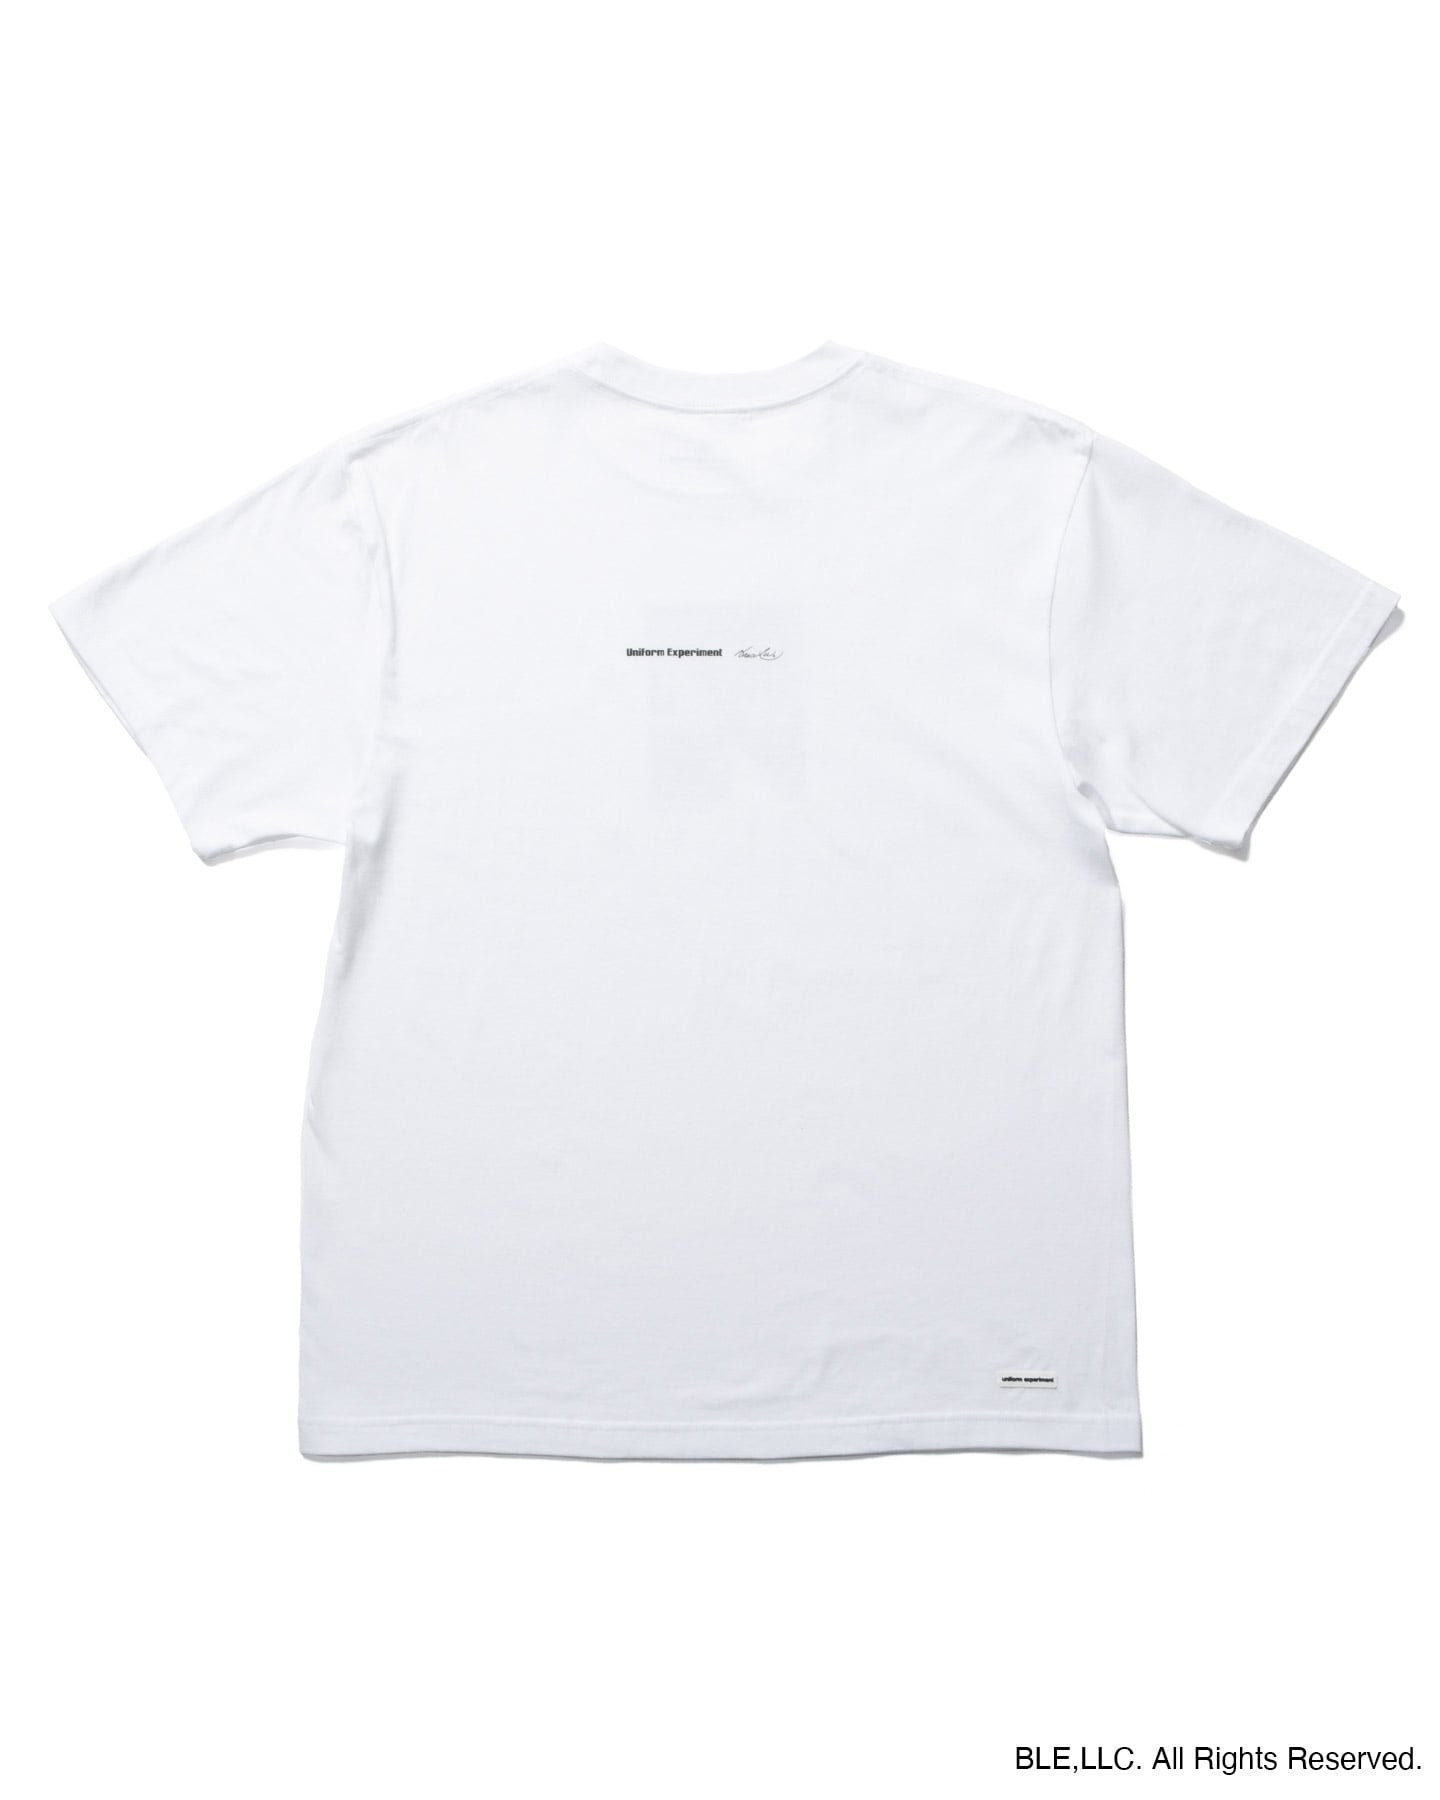 Tシャツ/カットソー(半袖/袖なし)supreme retaw soph uniform experiment